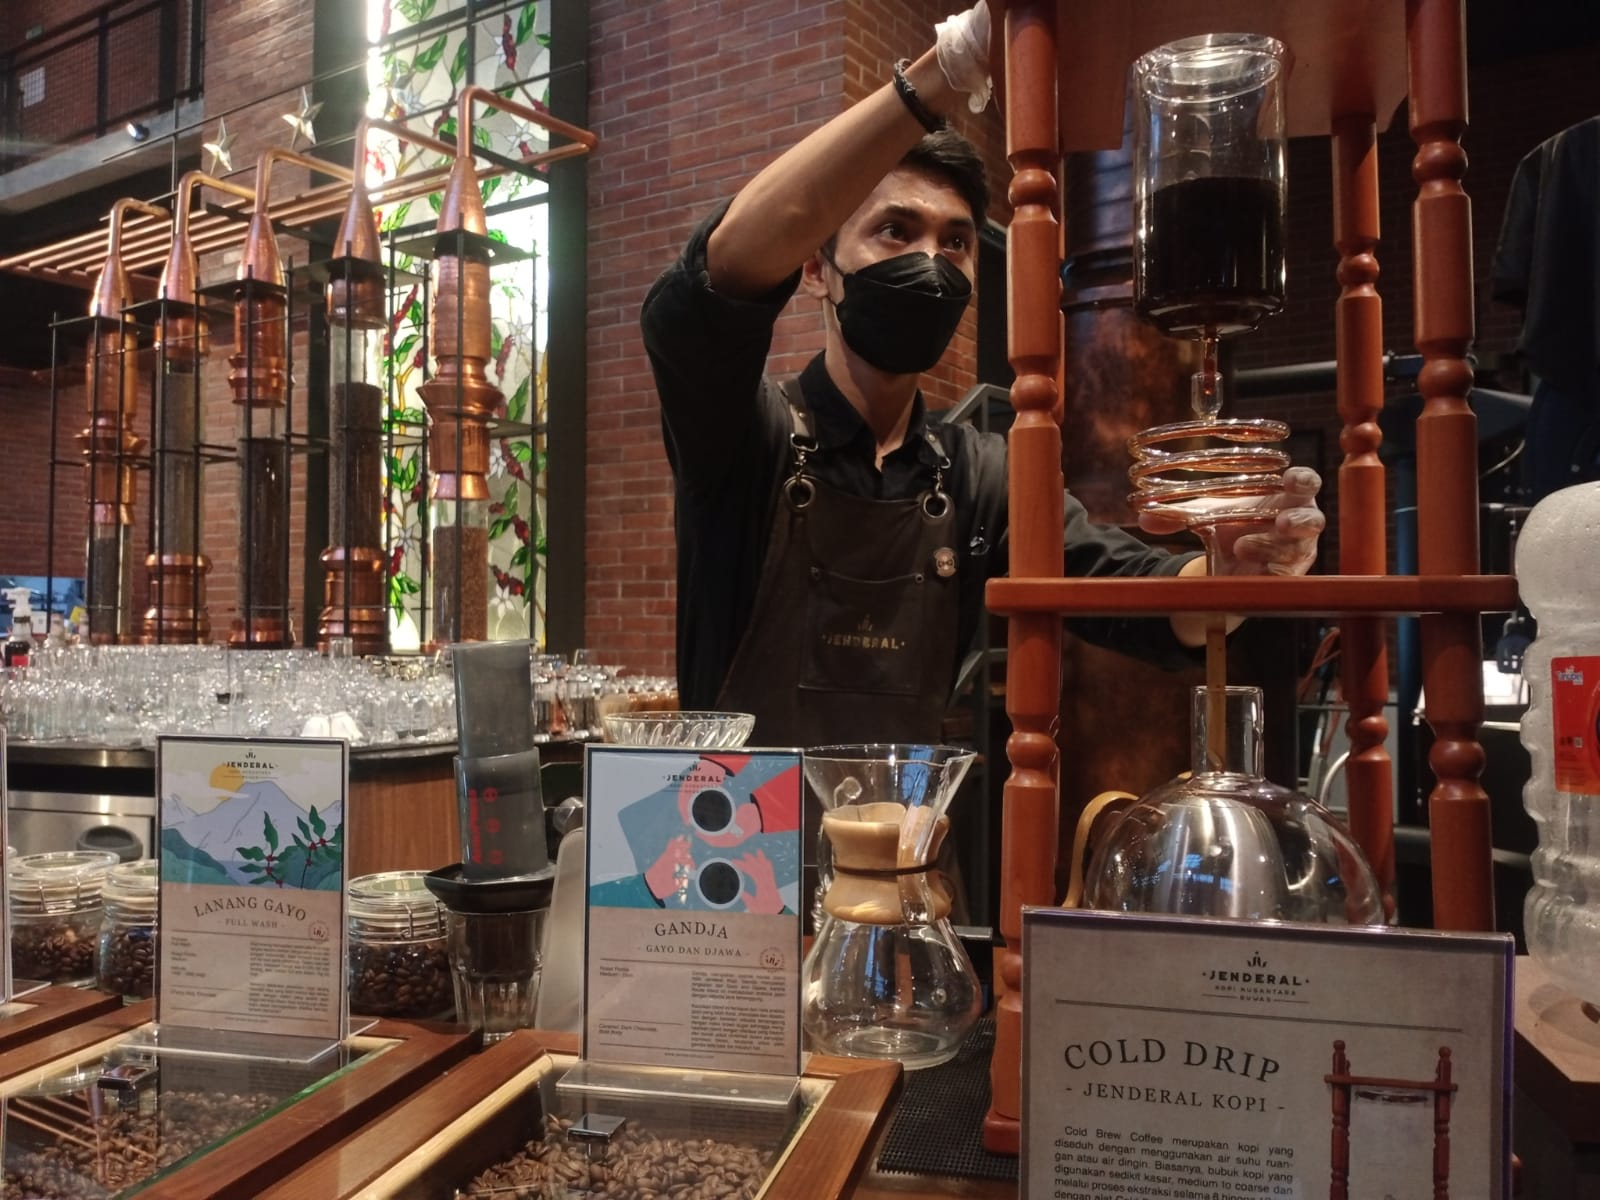 Barista Kopi Jenderal Nusantara Buwas Bandung tengah membuat kopi menggunakan teknik cold drip